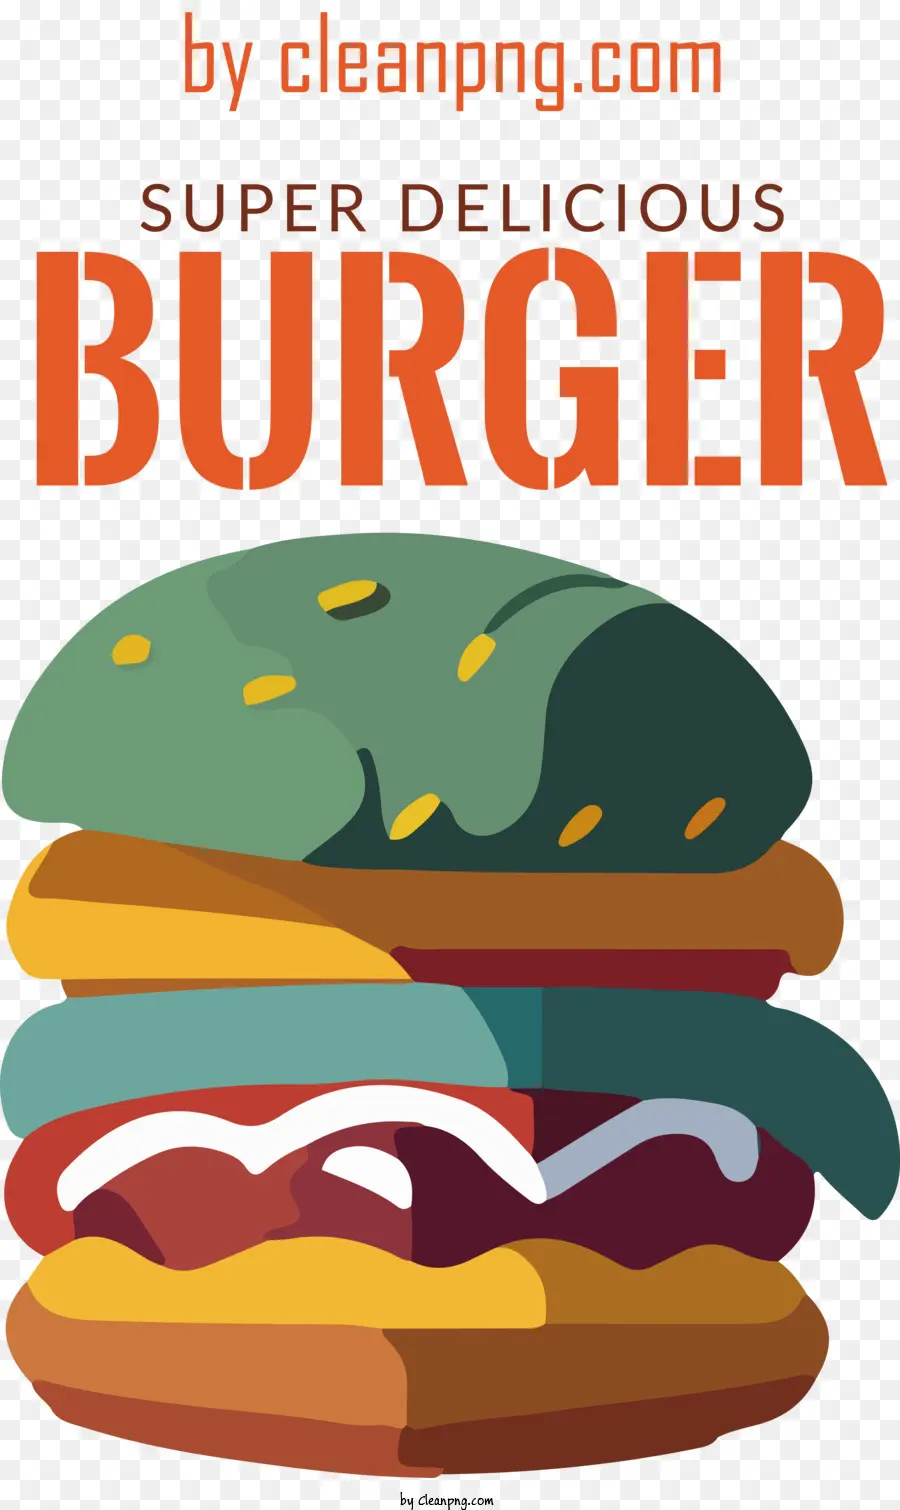 delicious burger international burger day fast food